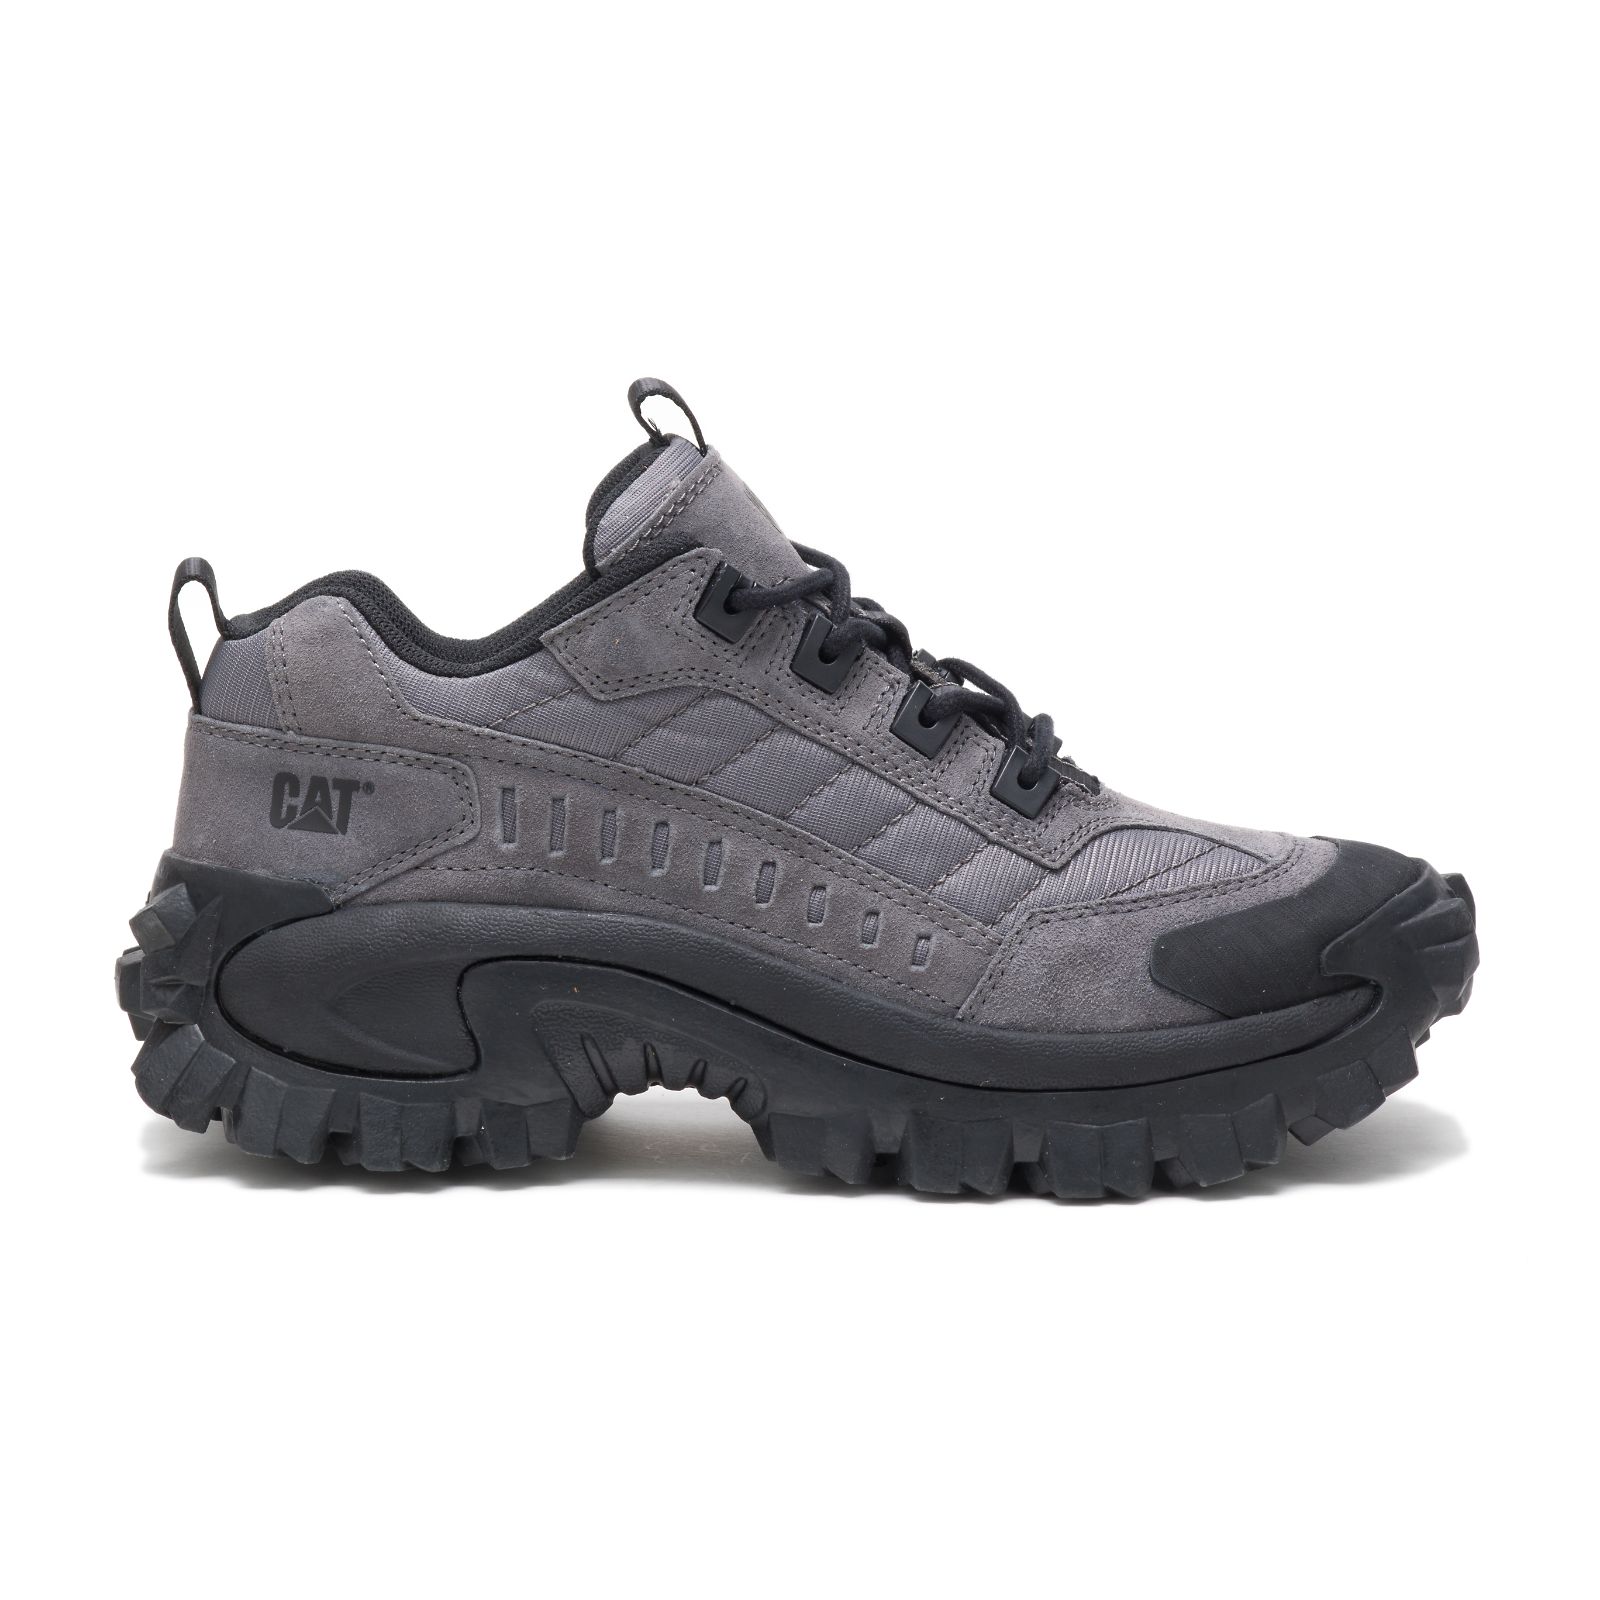 deep grey/Black Caterpillar Intruder Men's Sneakers | Cat-513984